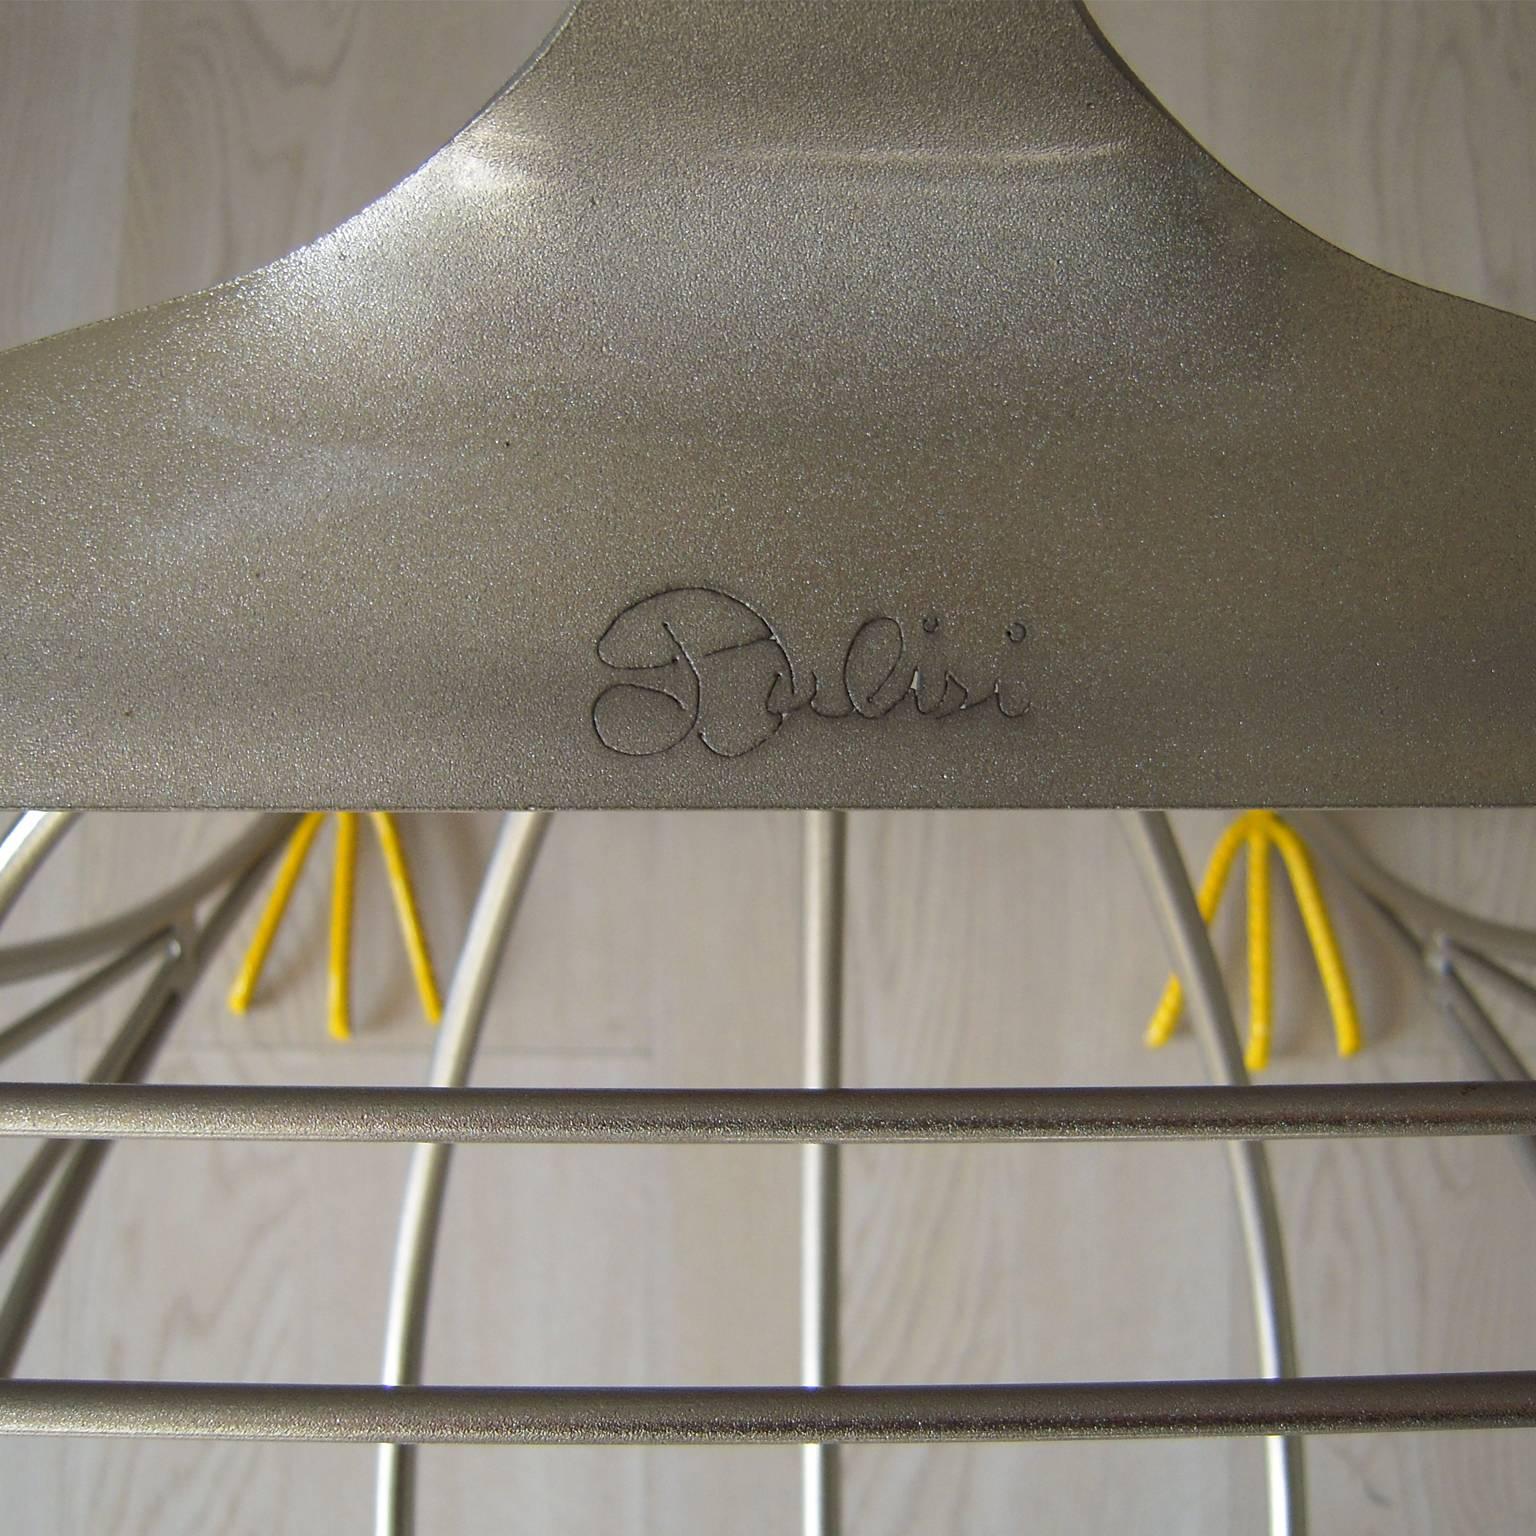 Riccardo Dalisi Signed Italian Zanotta Limited Edition Nickel Plated Steel Chair In Good Condition For Sale In Mornico al Serio ( BG), Lombardia